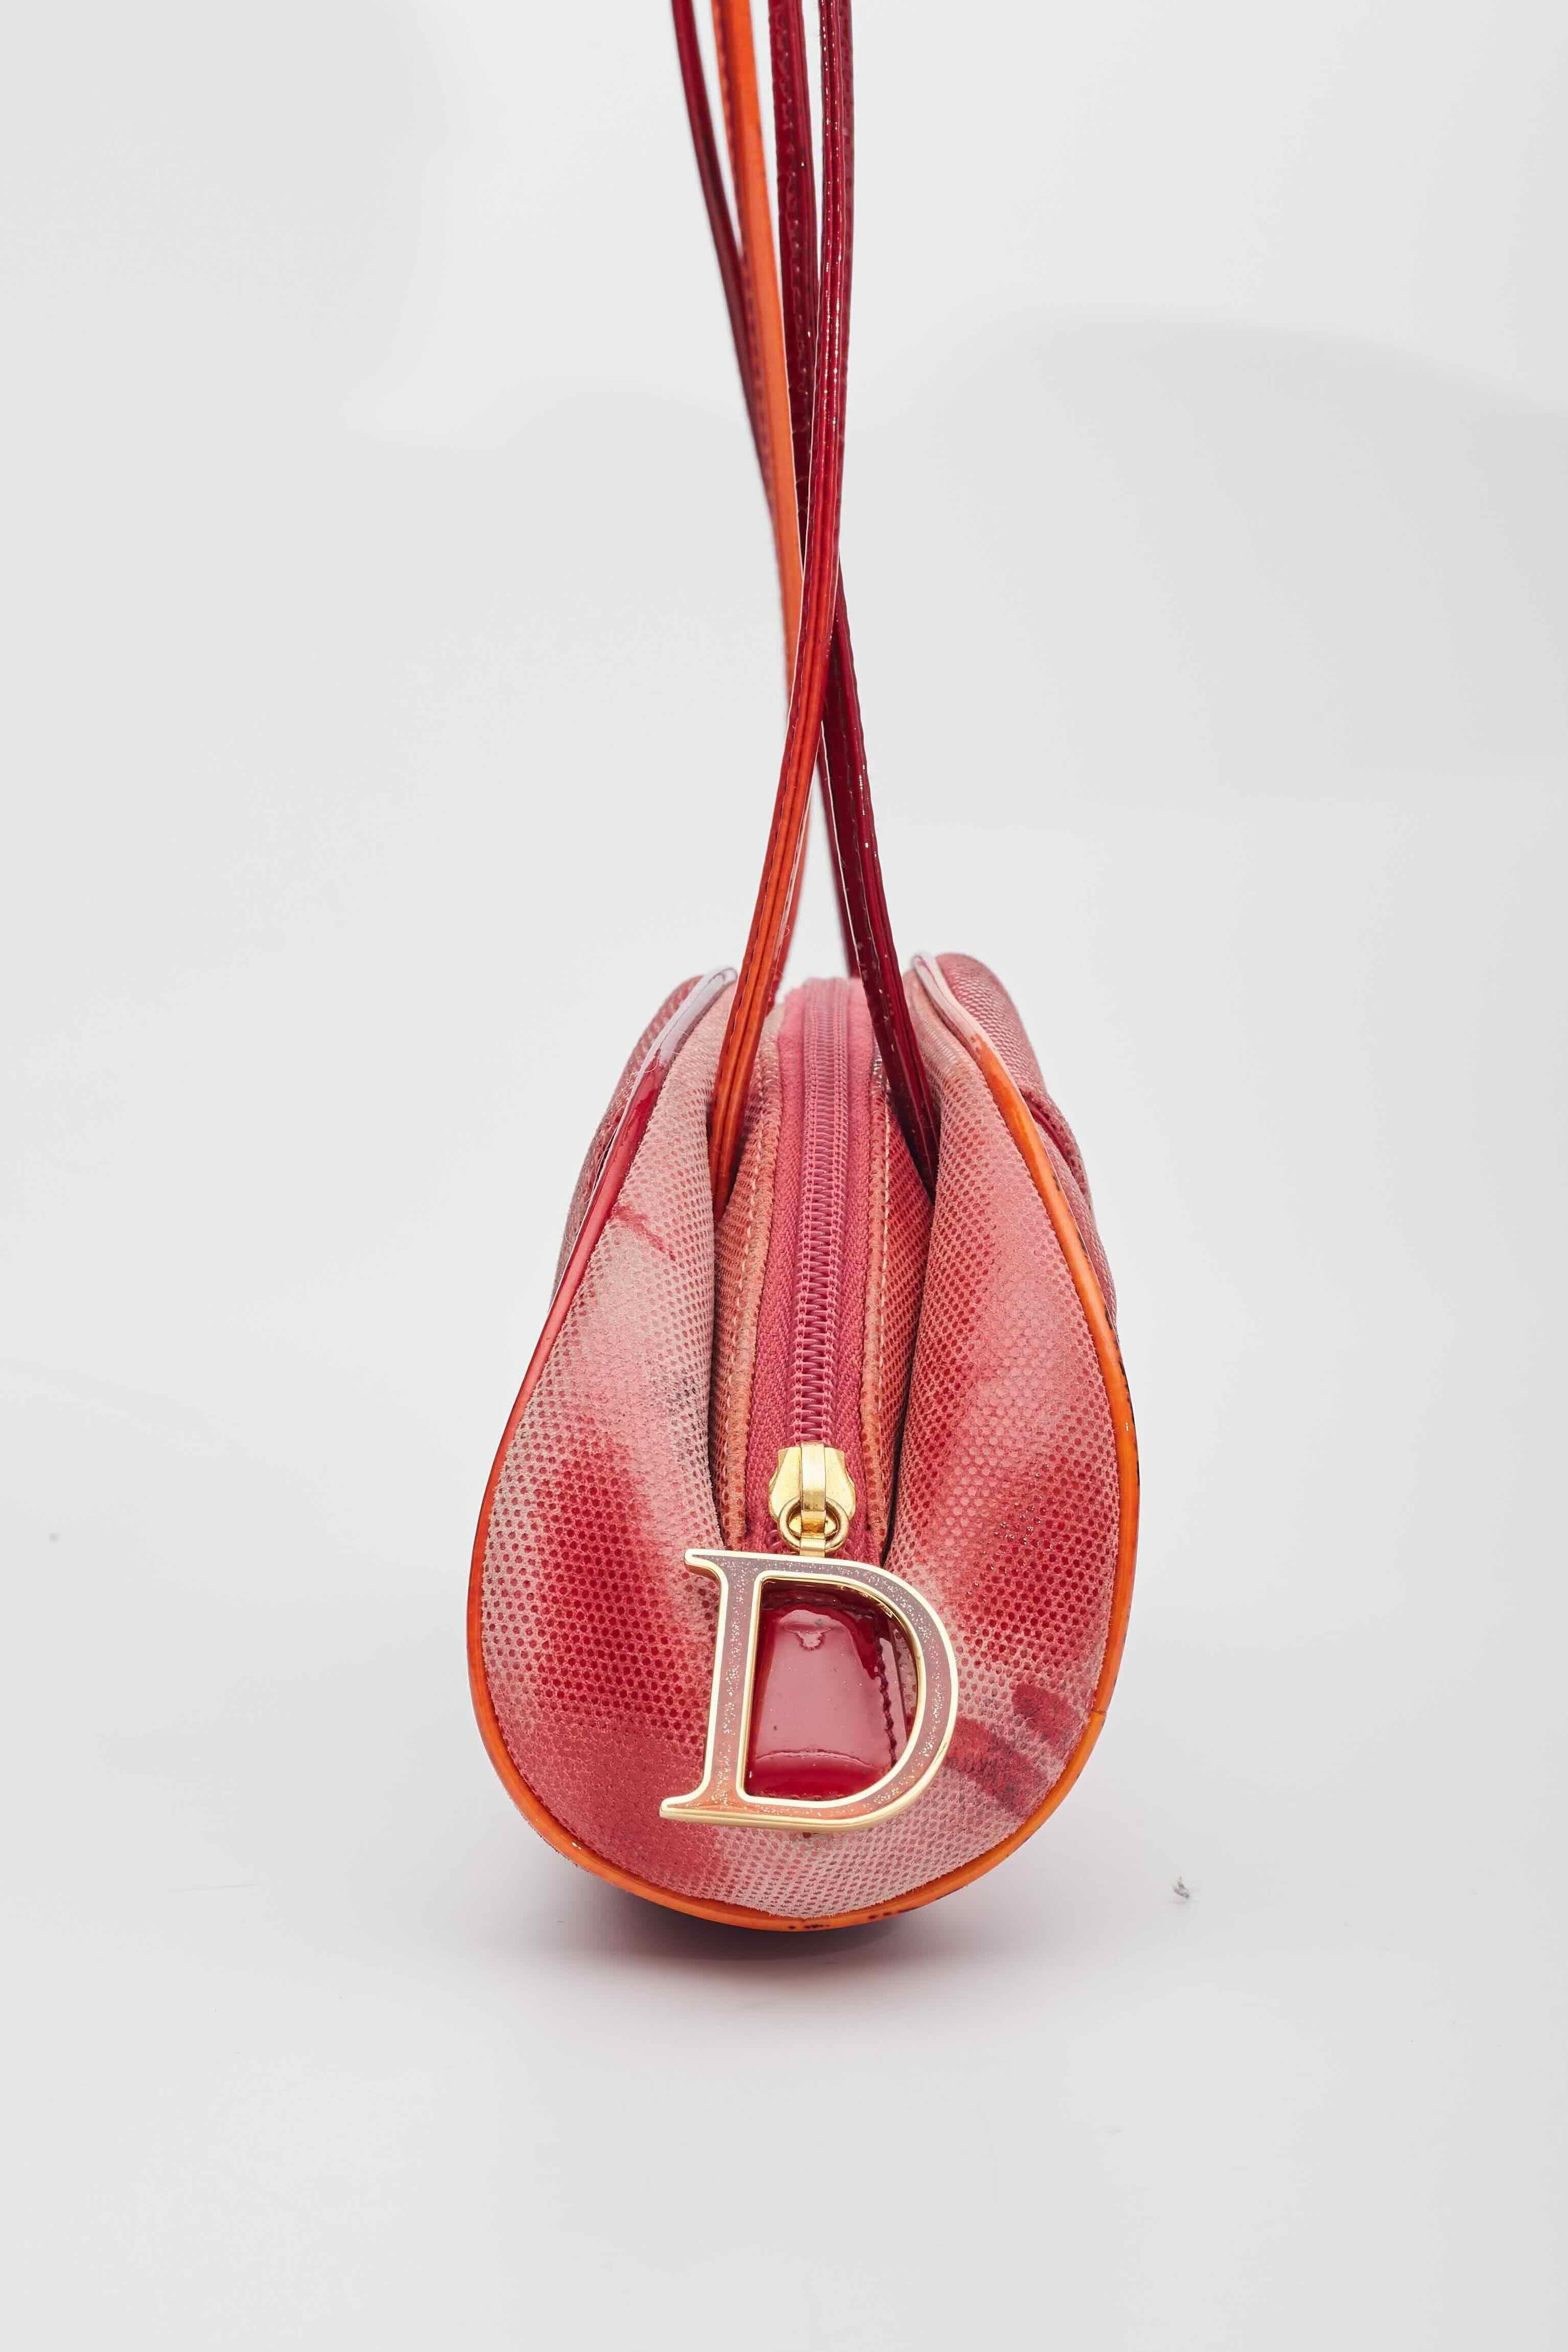 Women's Dior Suede Oyster Multi Red Shoulder Bag For Sale